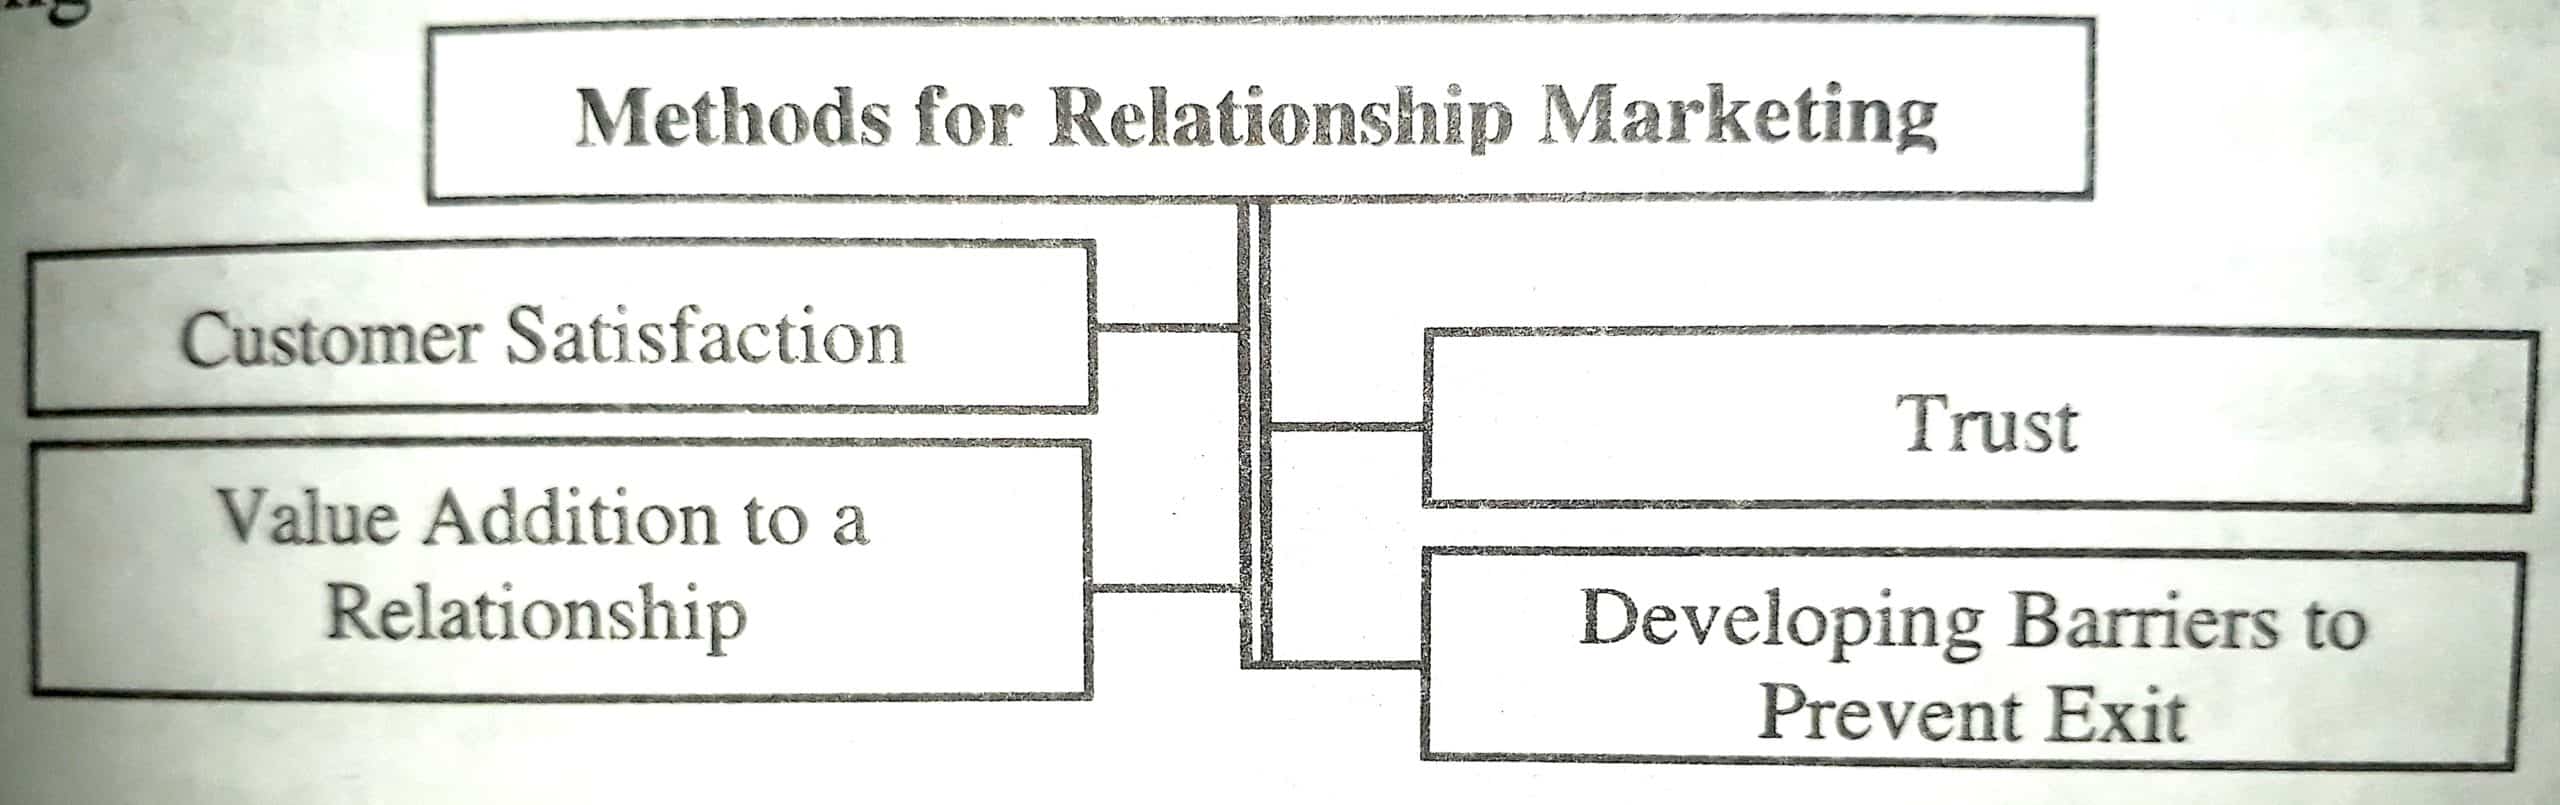 Methods of Relationship Marketing